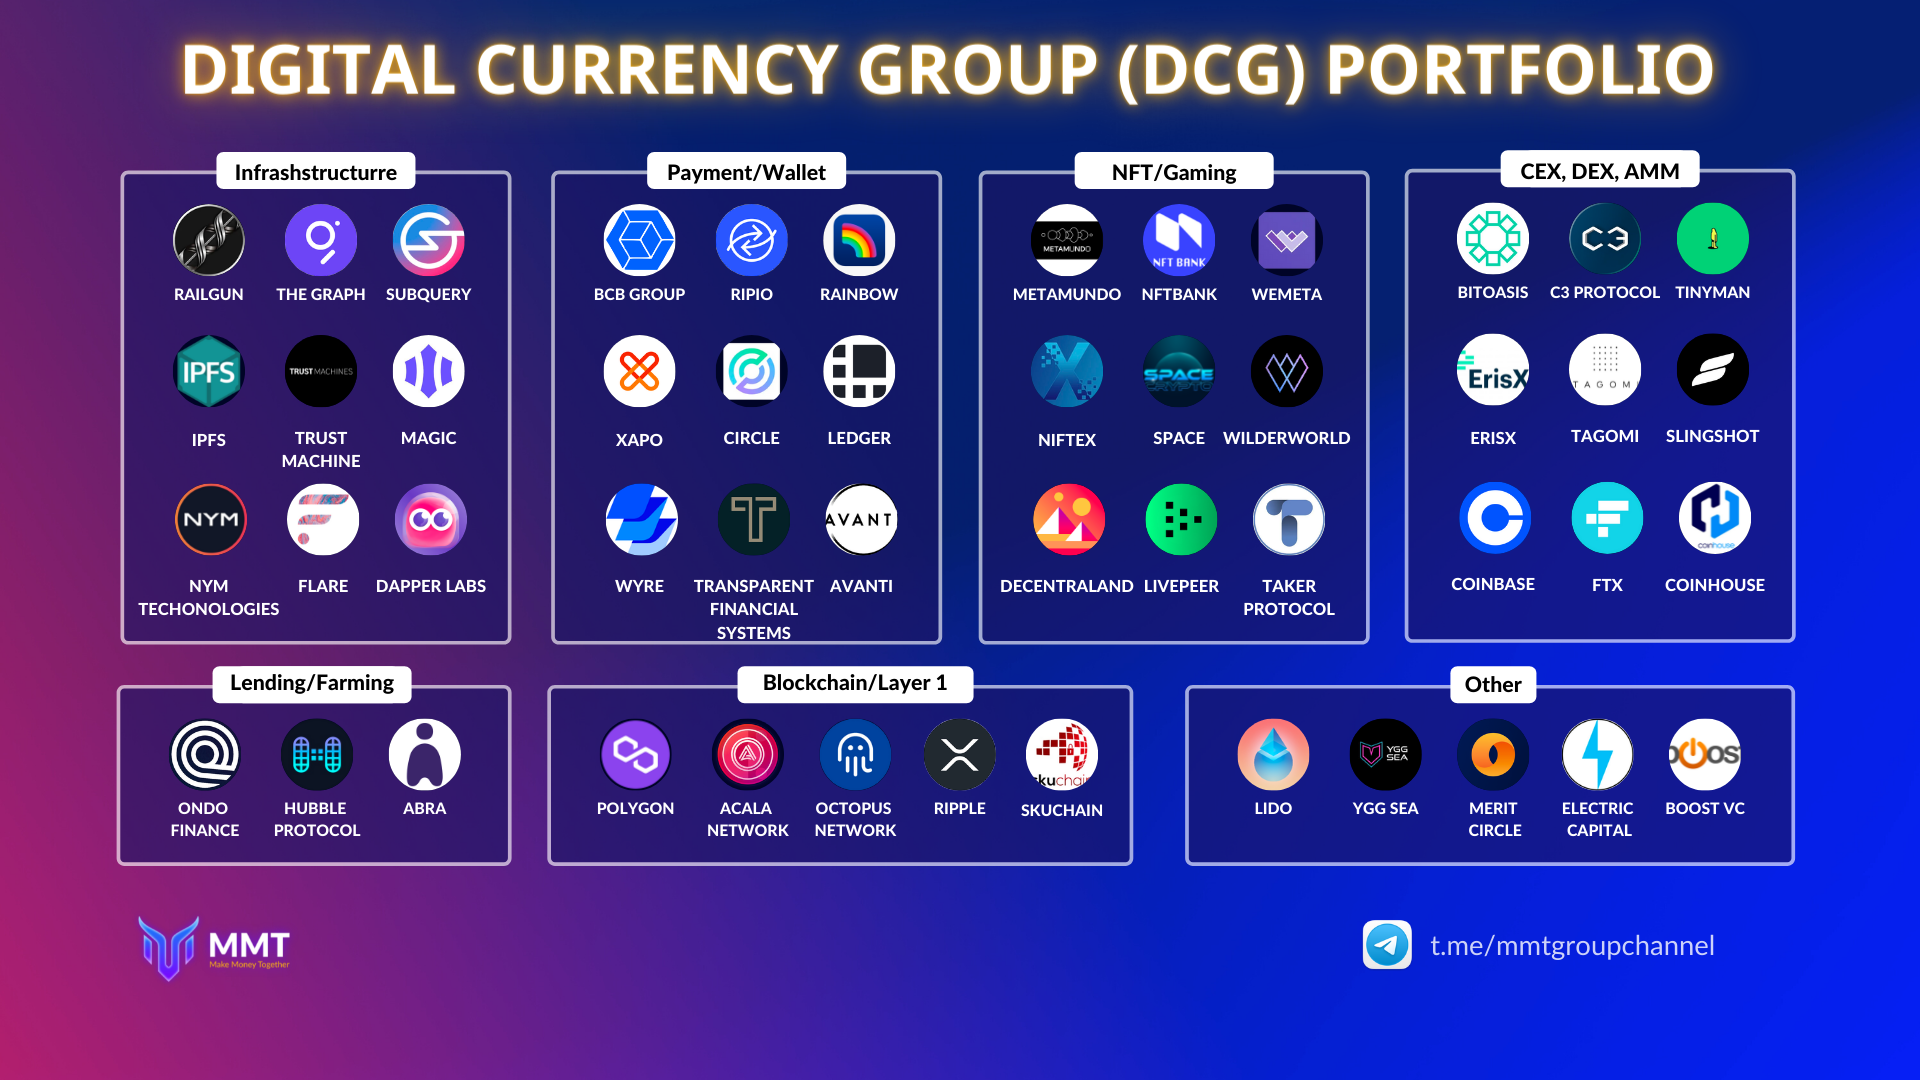 Tổng quan về Portfolio của Digital Currency Group (DCG)